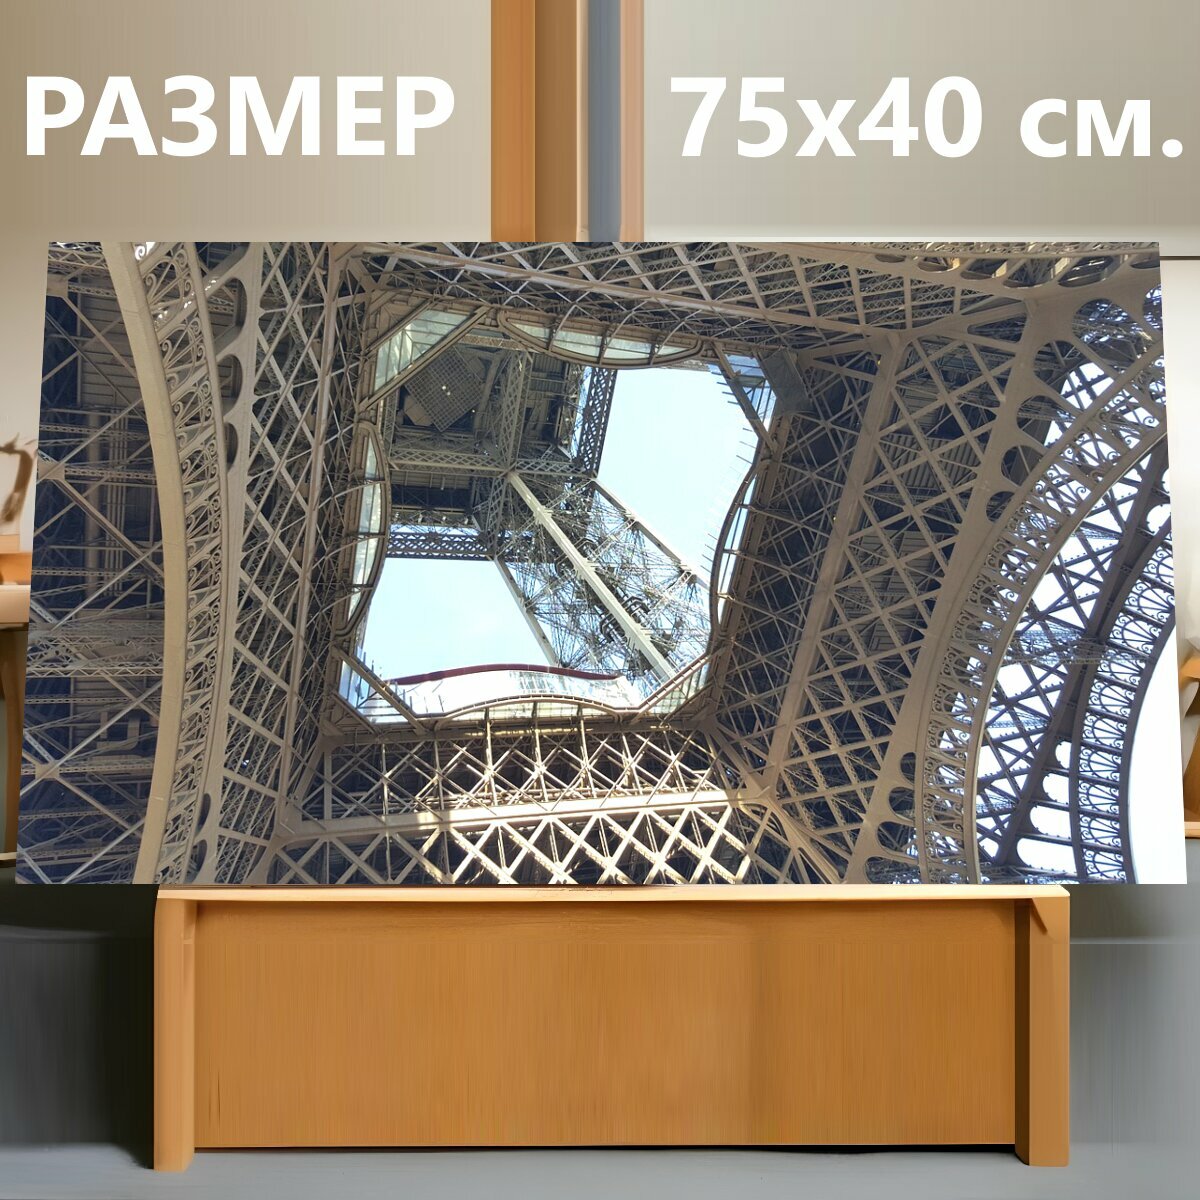 Картина на холсте "Эйфелева башня, франция, ва" на подрамнике 75х40 см. для интерьера